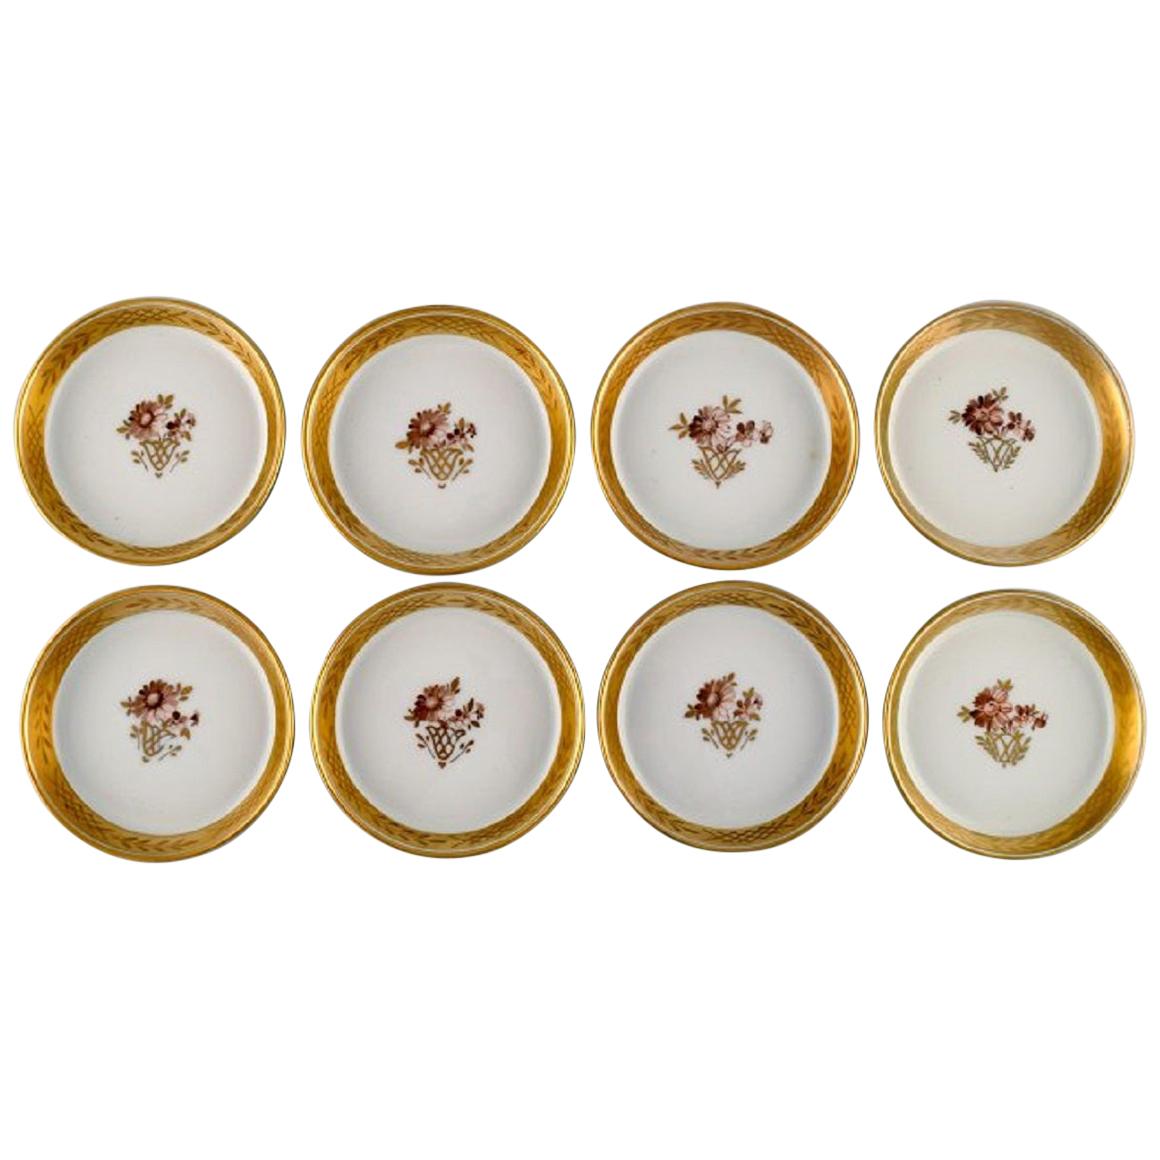 Acht Royal Copenhagen Goldene Korbuntersetzer aus Porzellan mit goldener Kante